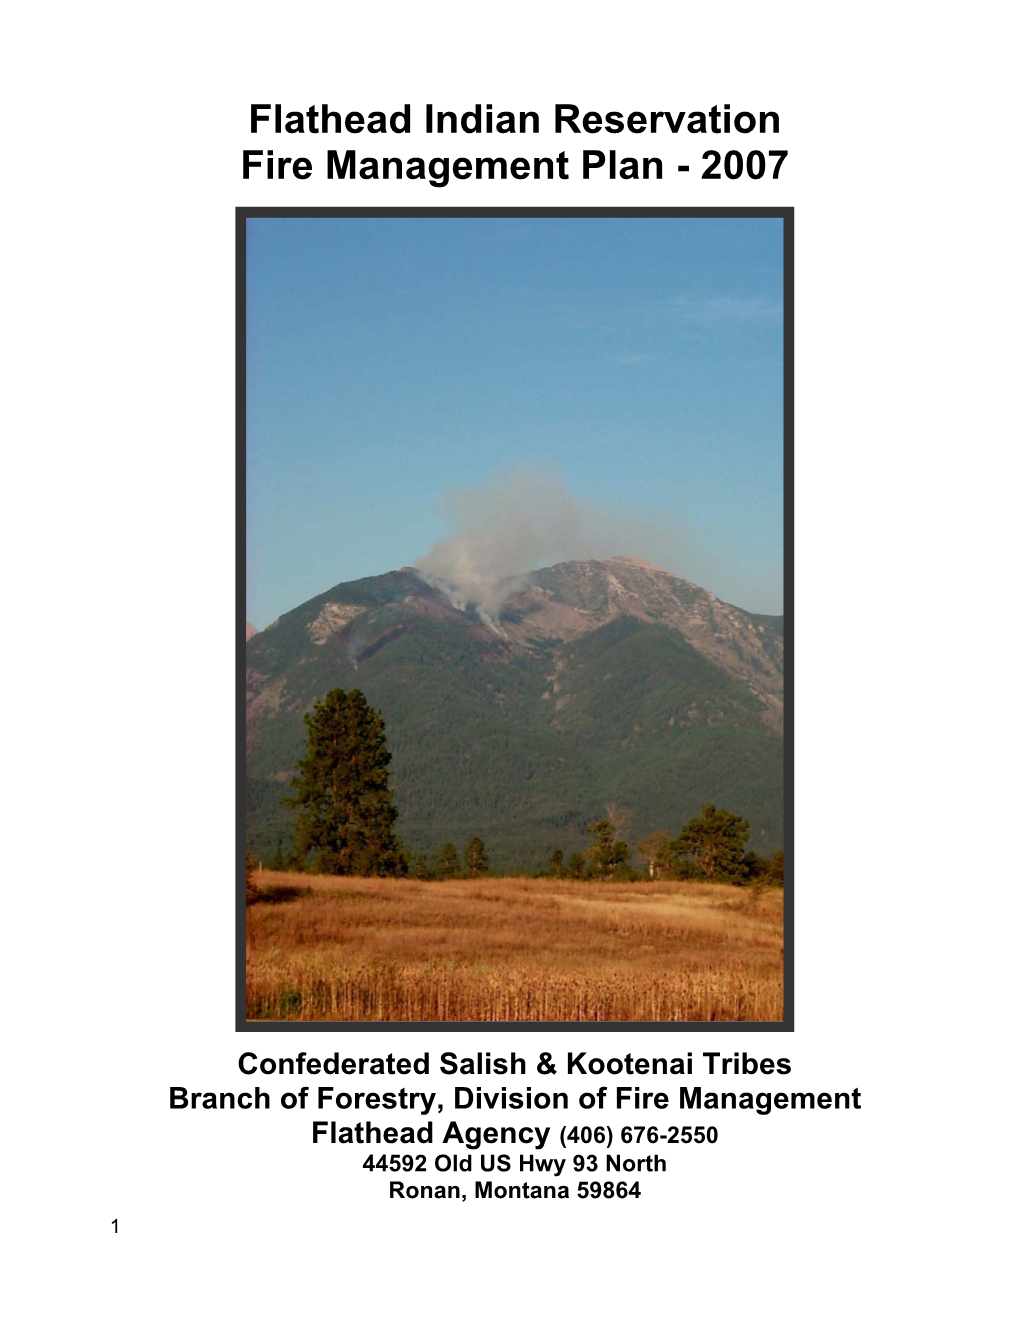 Flathead Indian Reservation Fire Management Plan - 2007